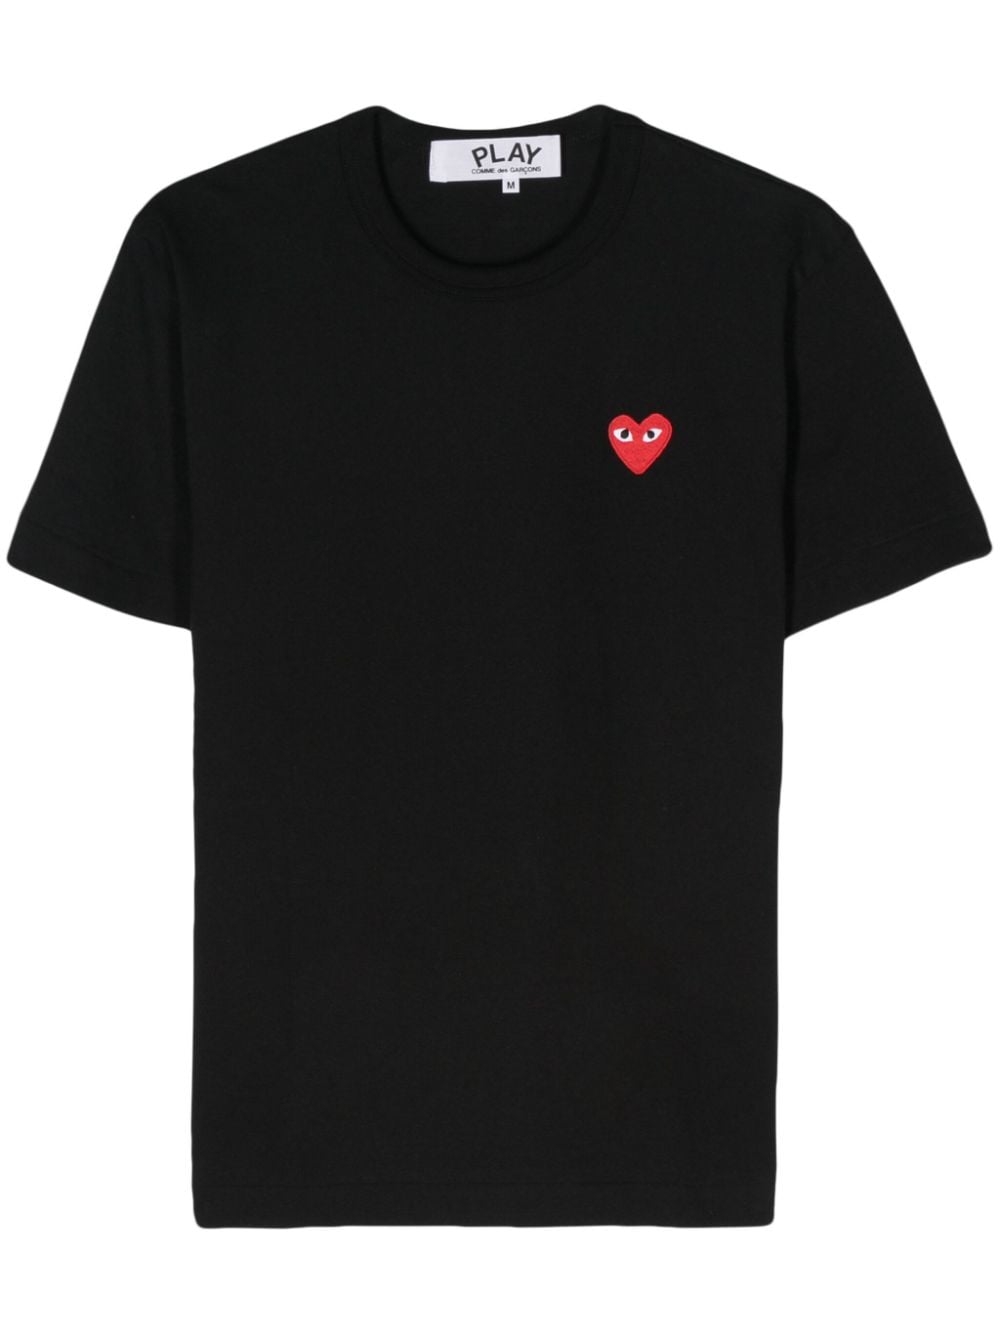 Black cotton jersey texture T-shirt